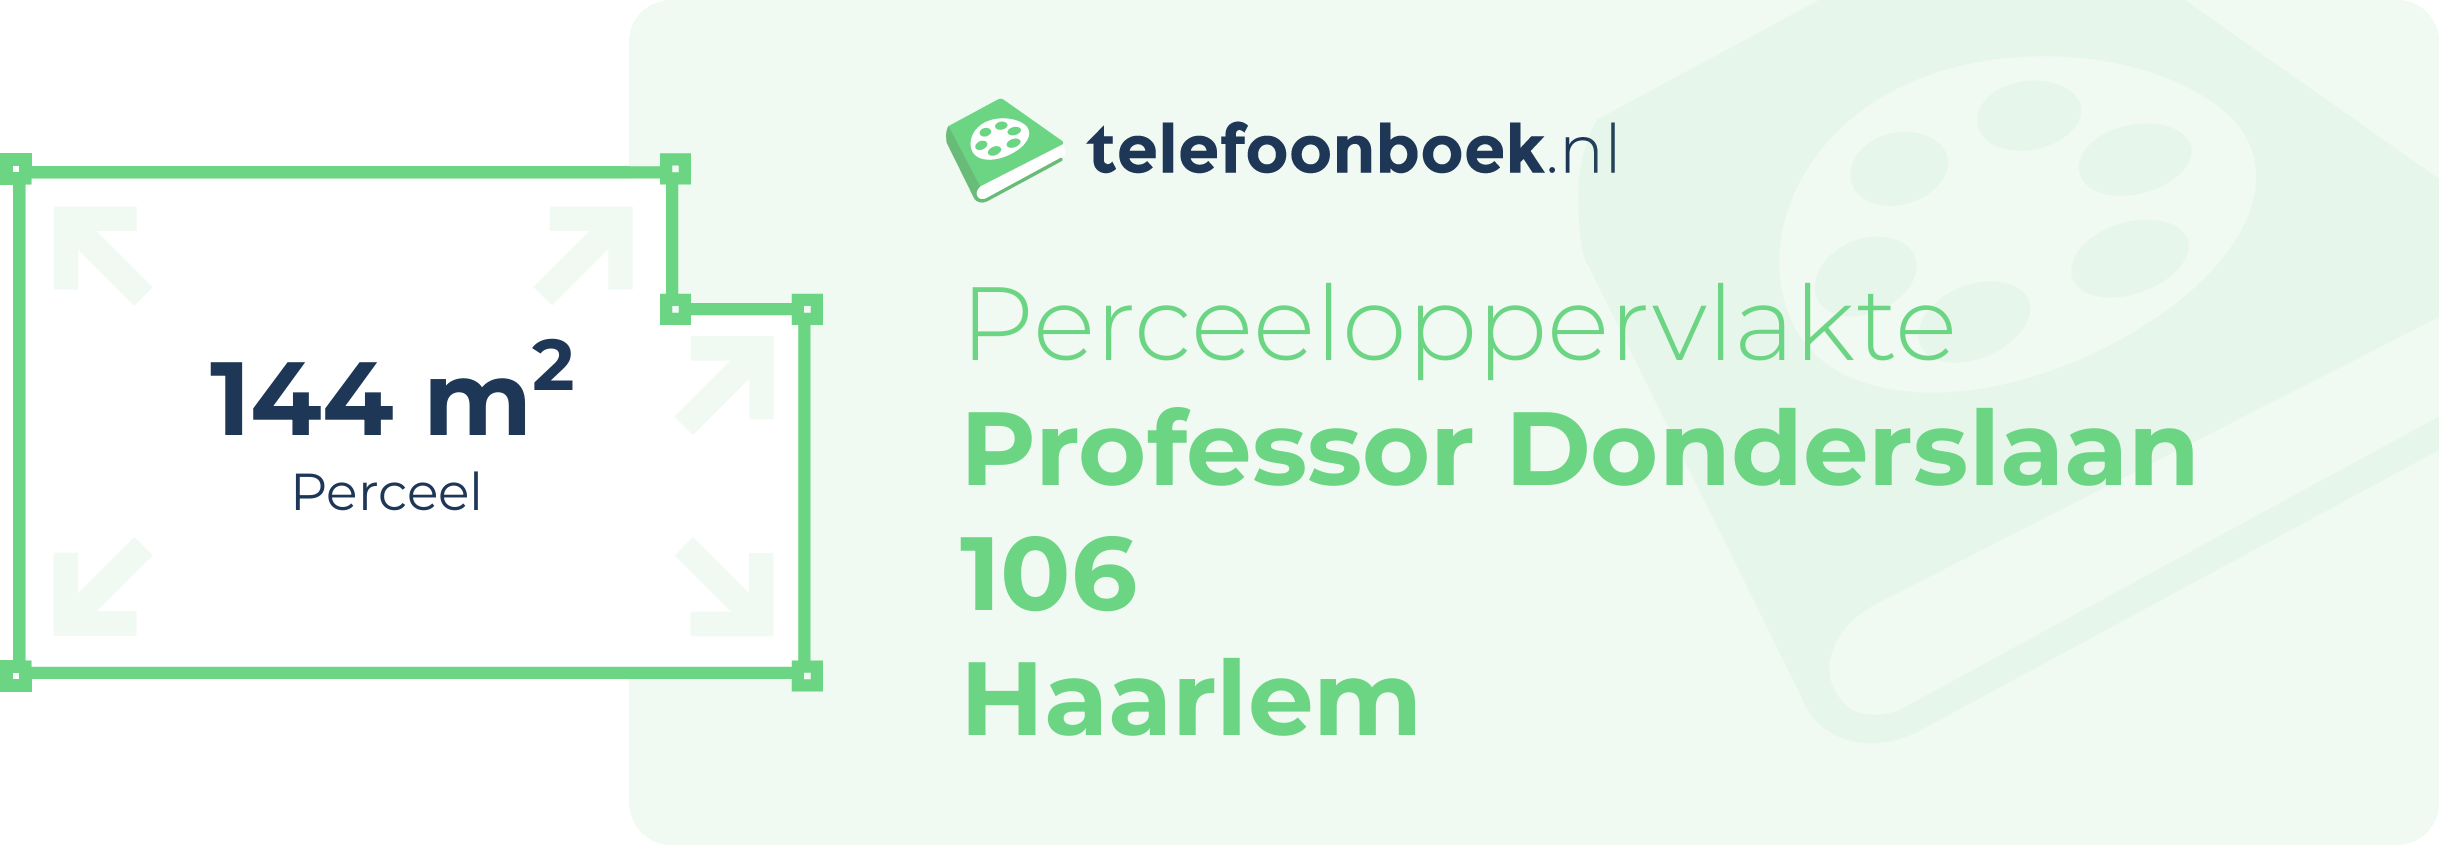 Perceeloppervlakte Professor Donderslaan 106 Haarlem